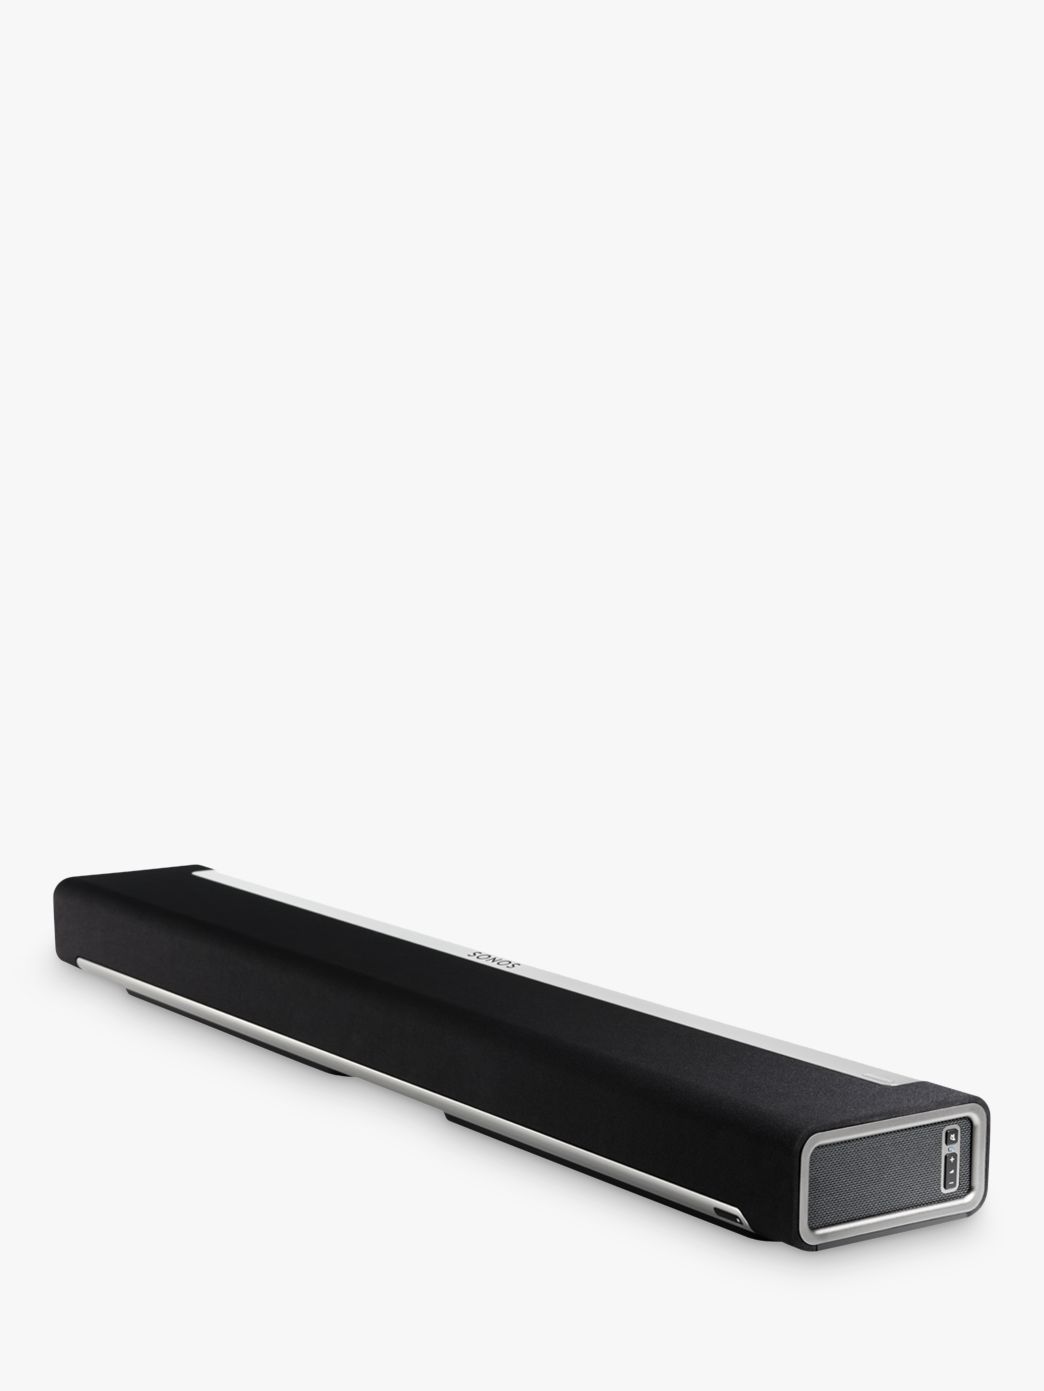 Sonos Playbar Home Cinema Sound Bar